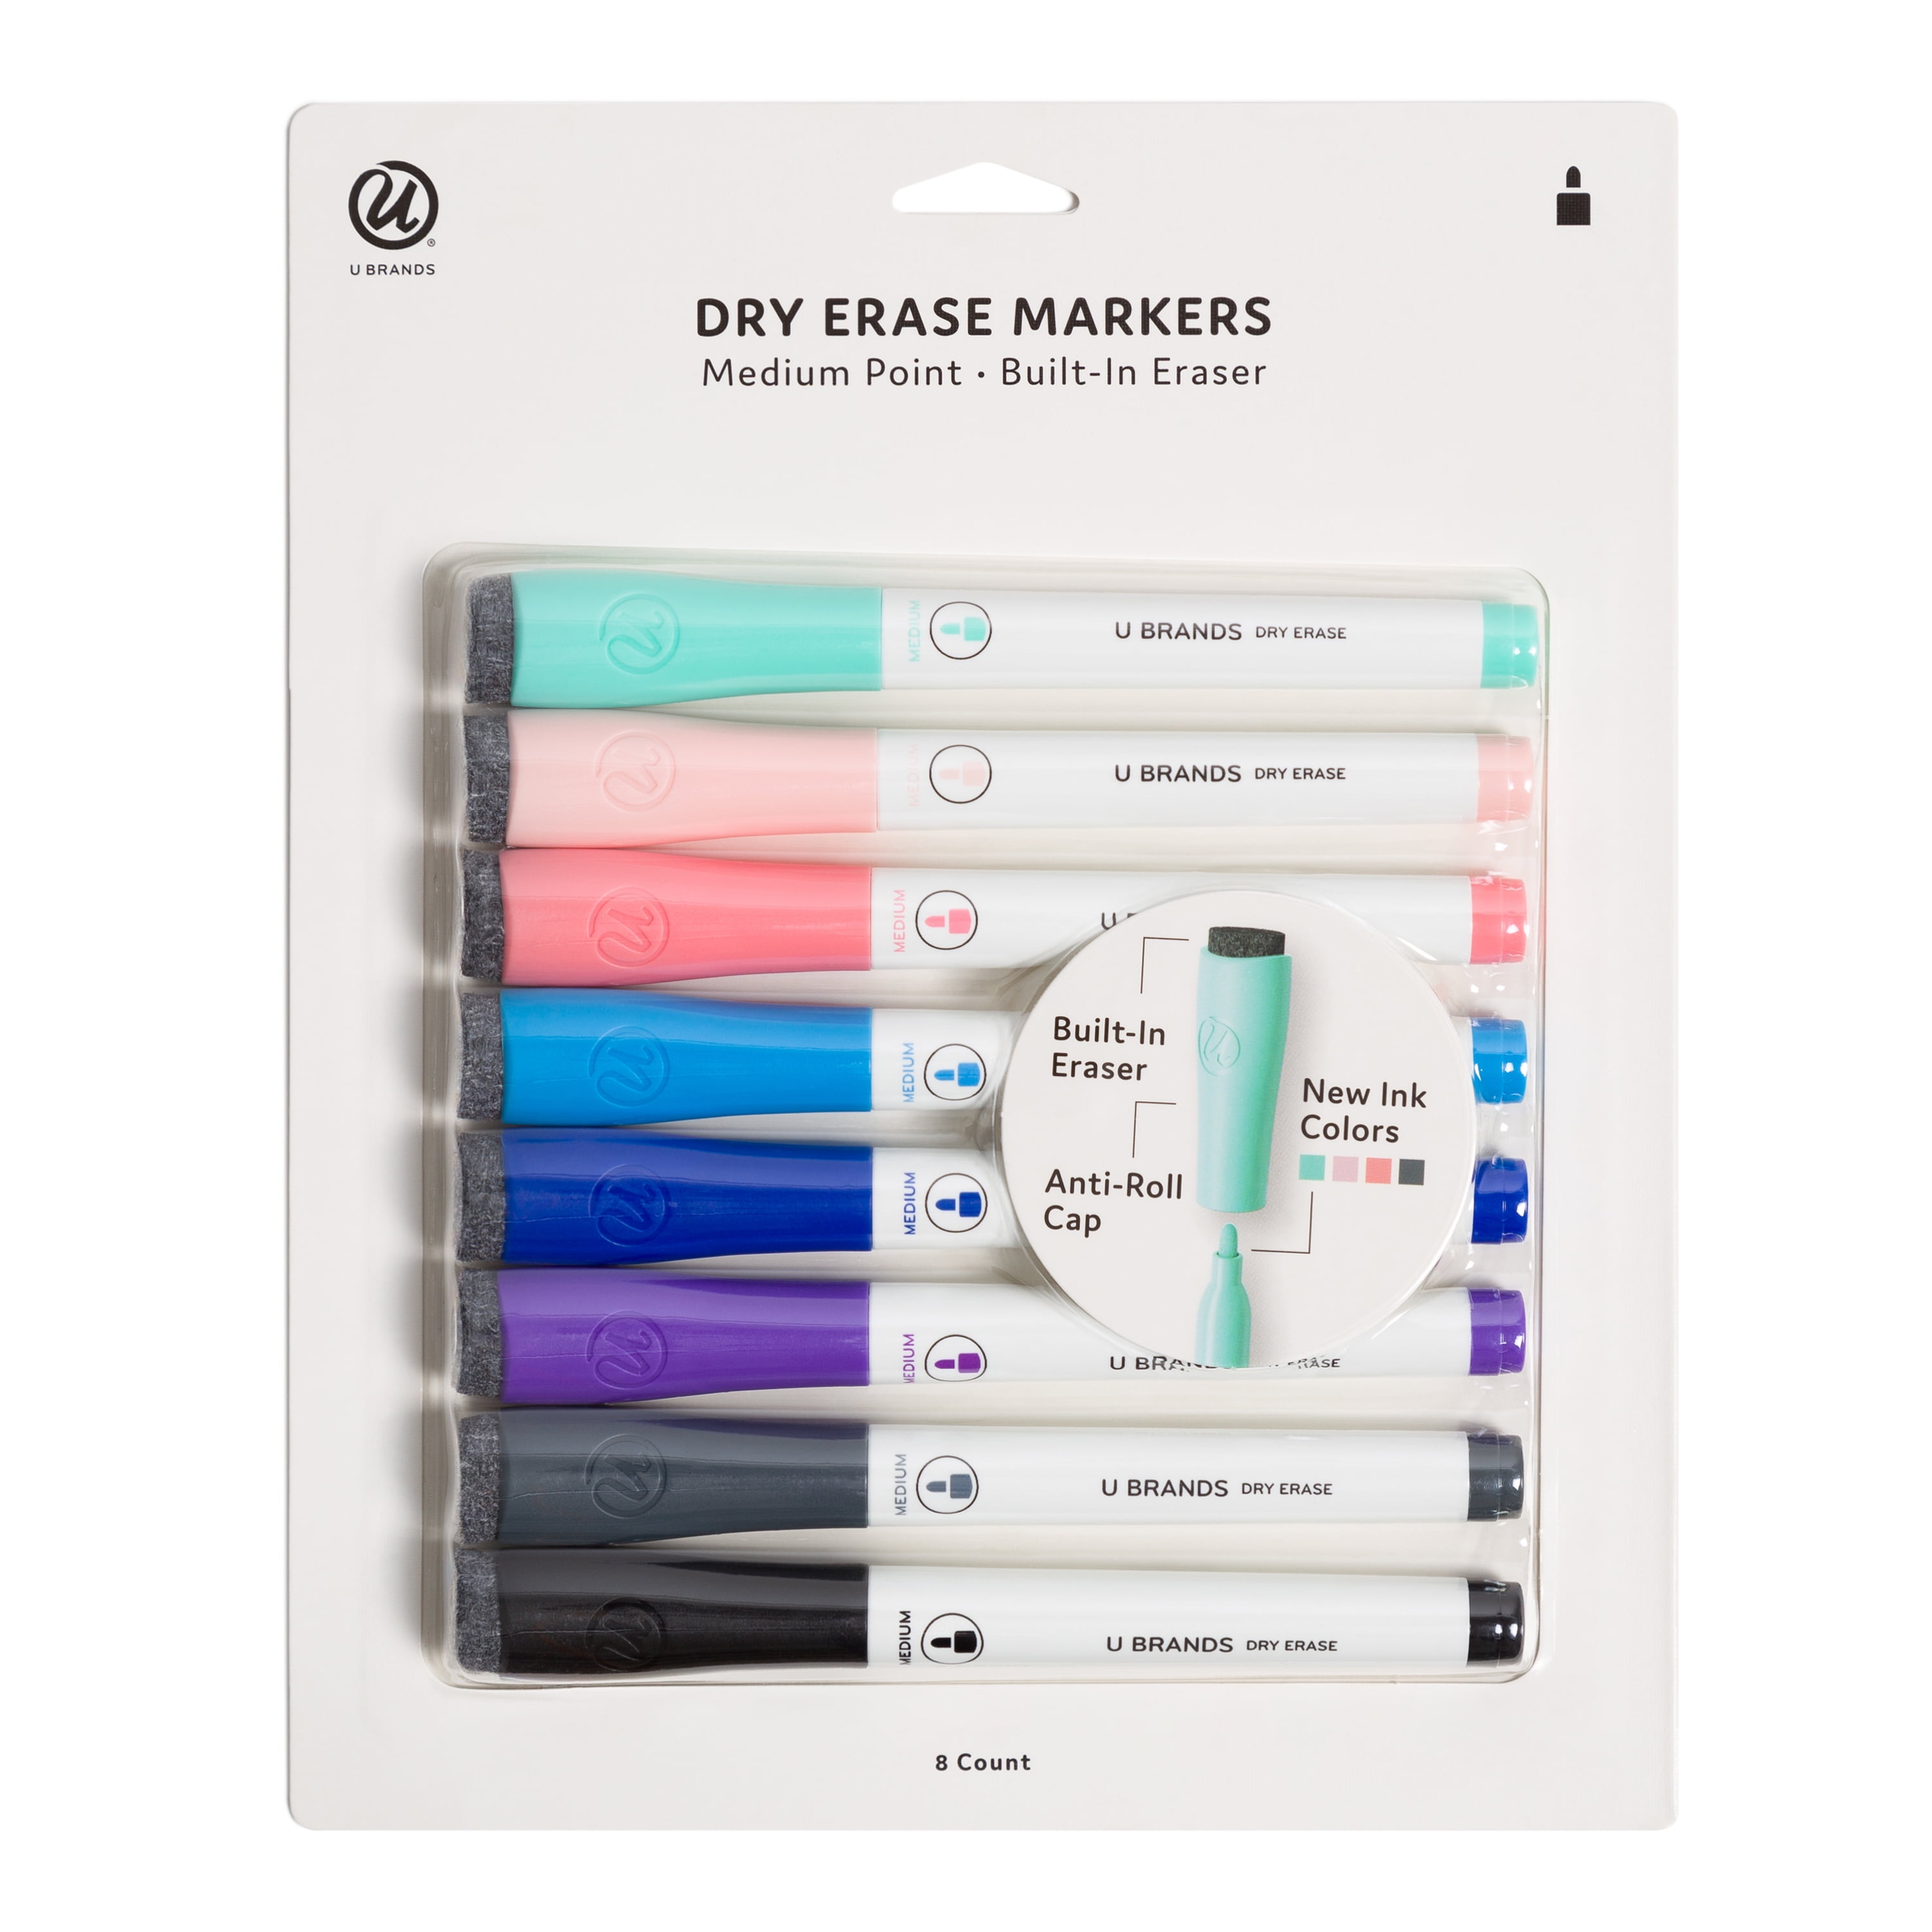 1Pcs Magnetic Erasable White Board Markers Color Pen Dry Wipe Maker Eraser 